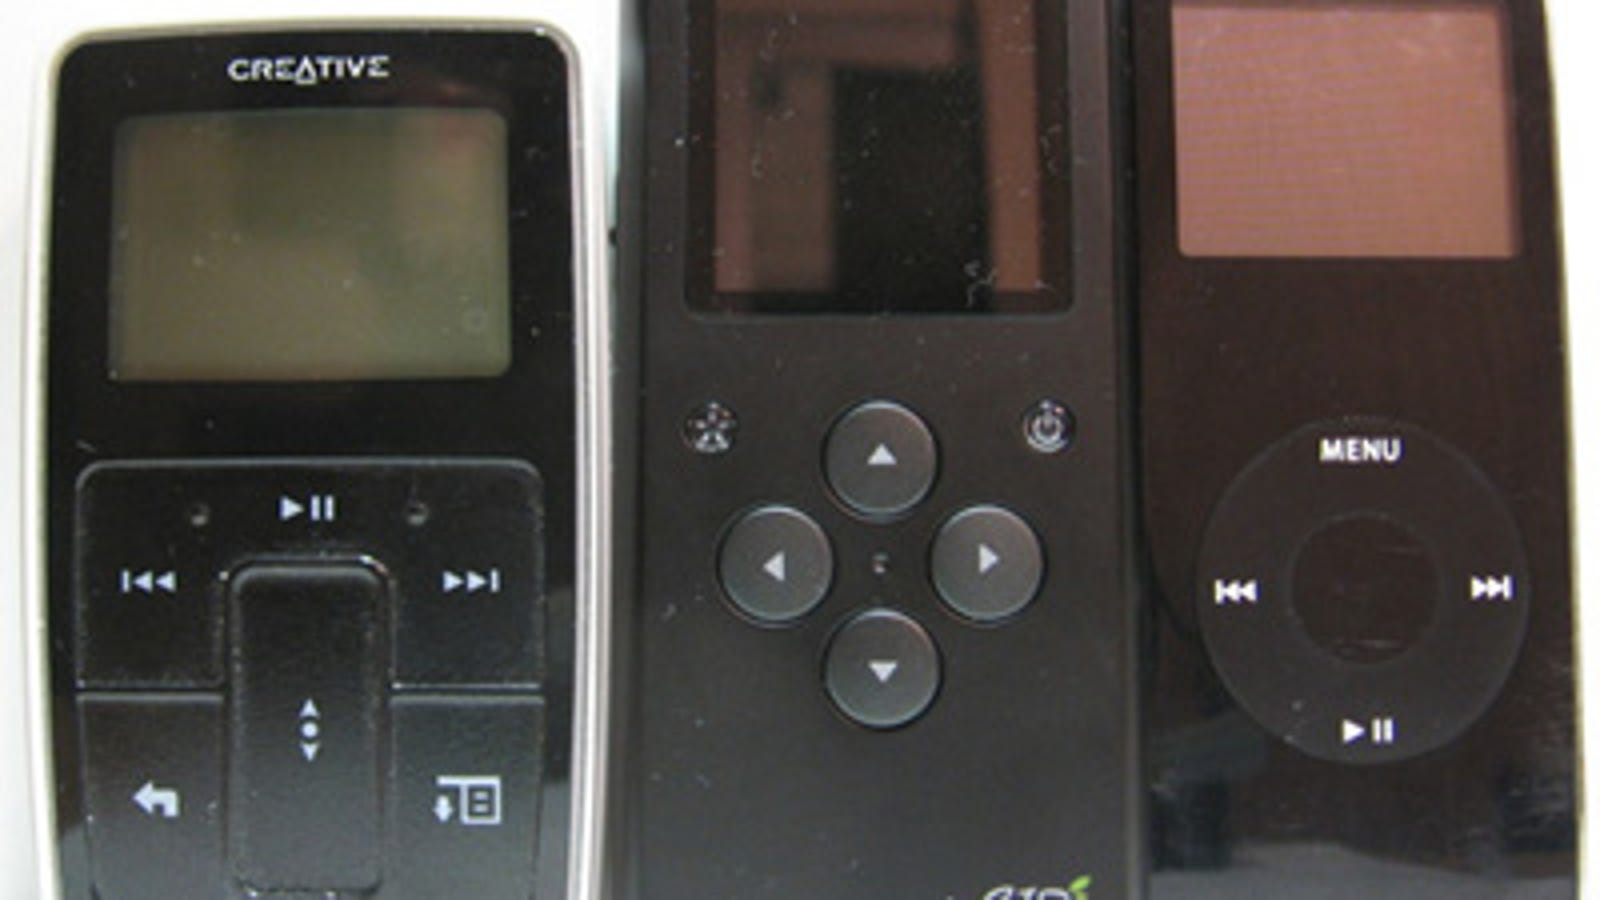 iRiver E10 Reviewed (Good iPod Nano Alternative, But Lousy Software)